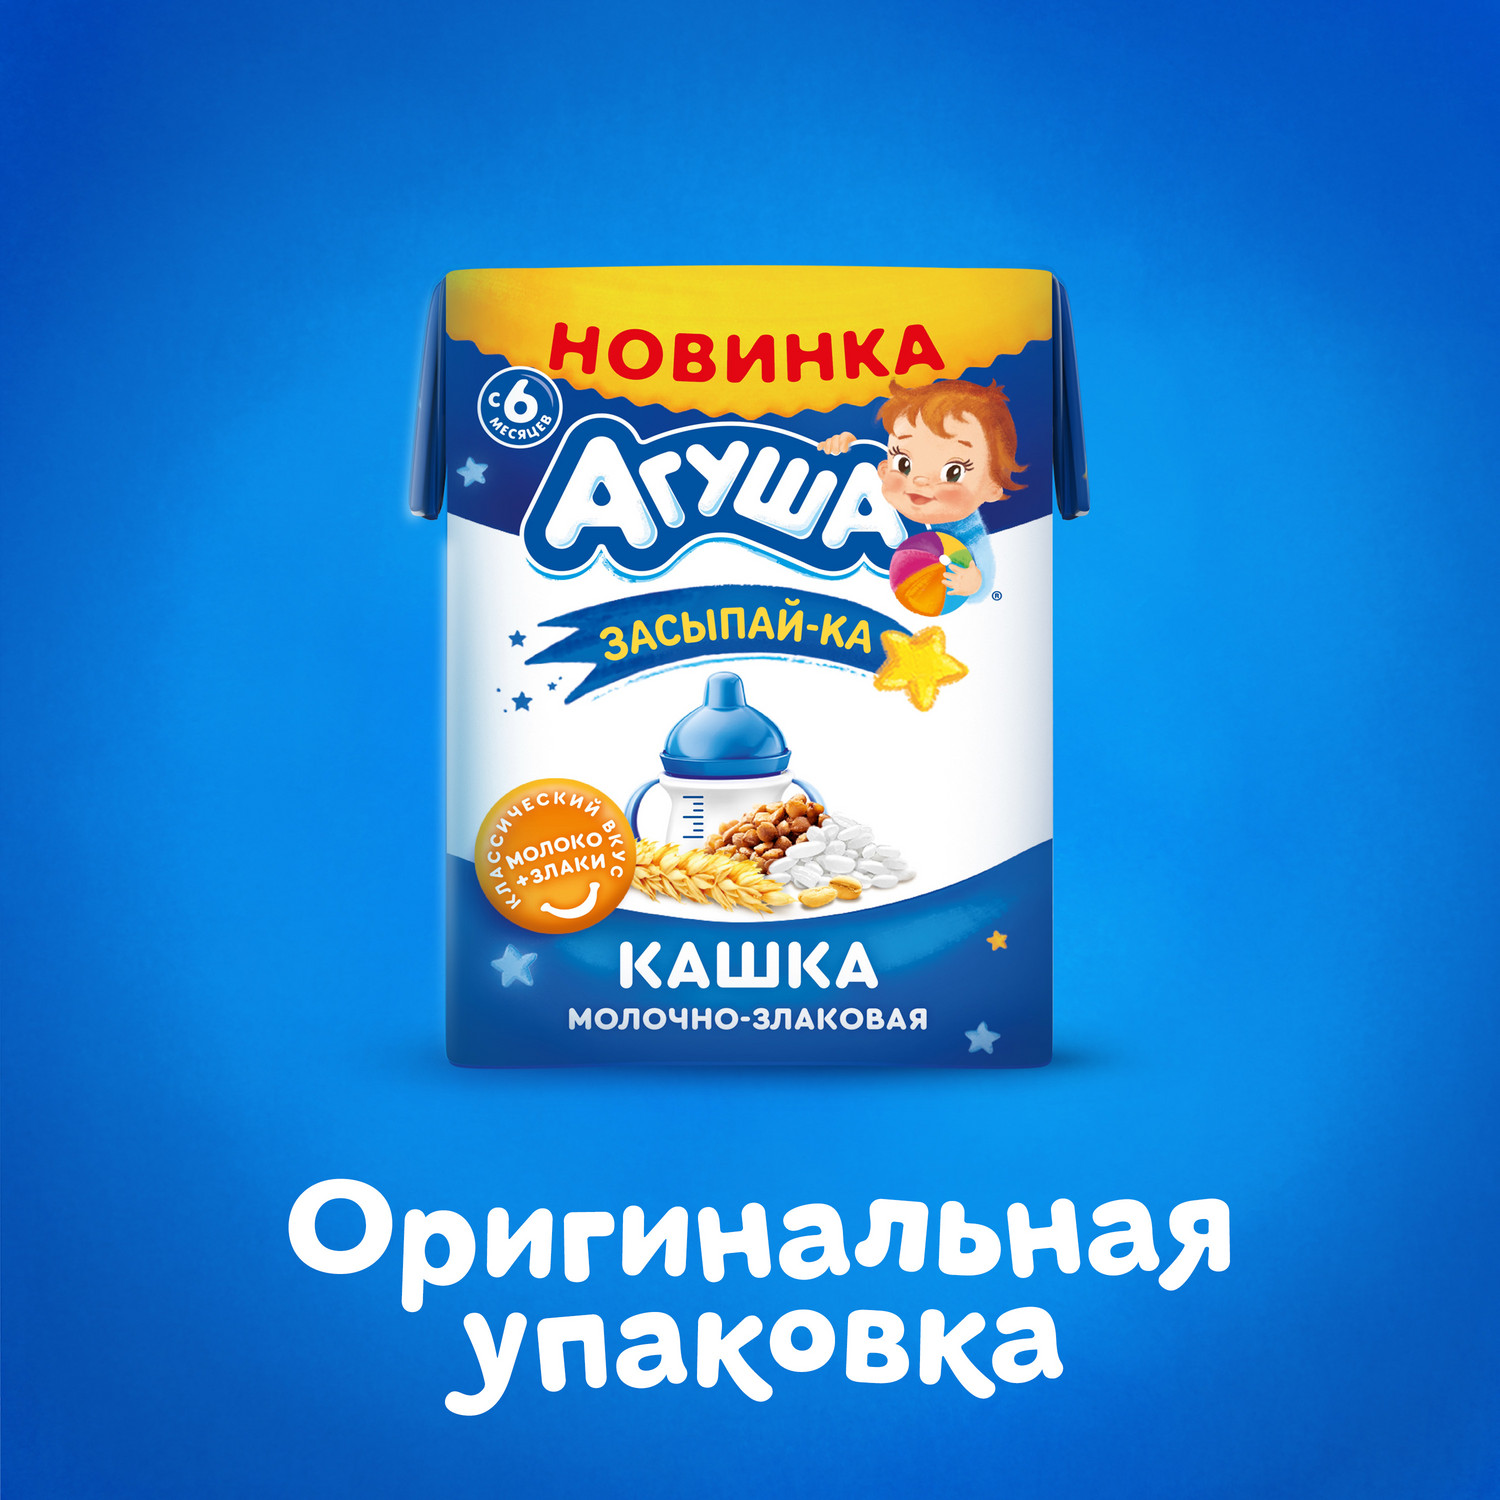 Каша жидкая Агуша Засыпай-ка молочно-злаковая 200г с 6месяцев - фото 3